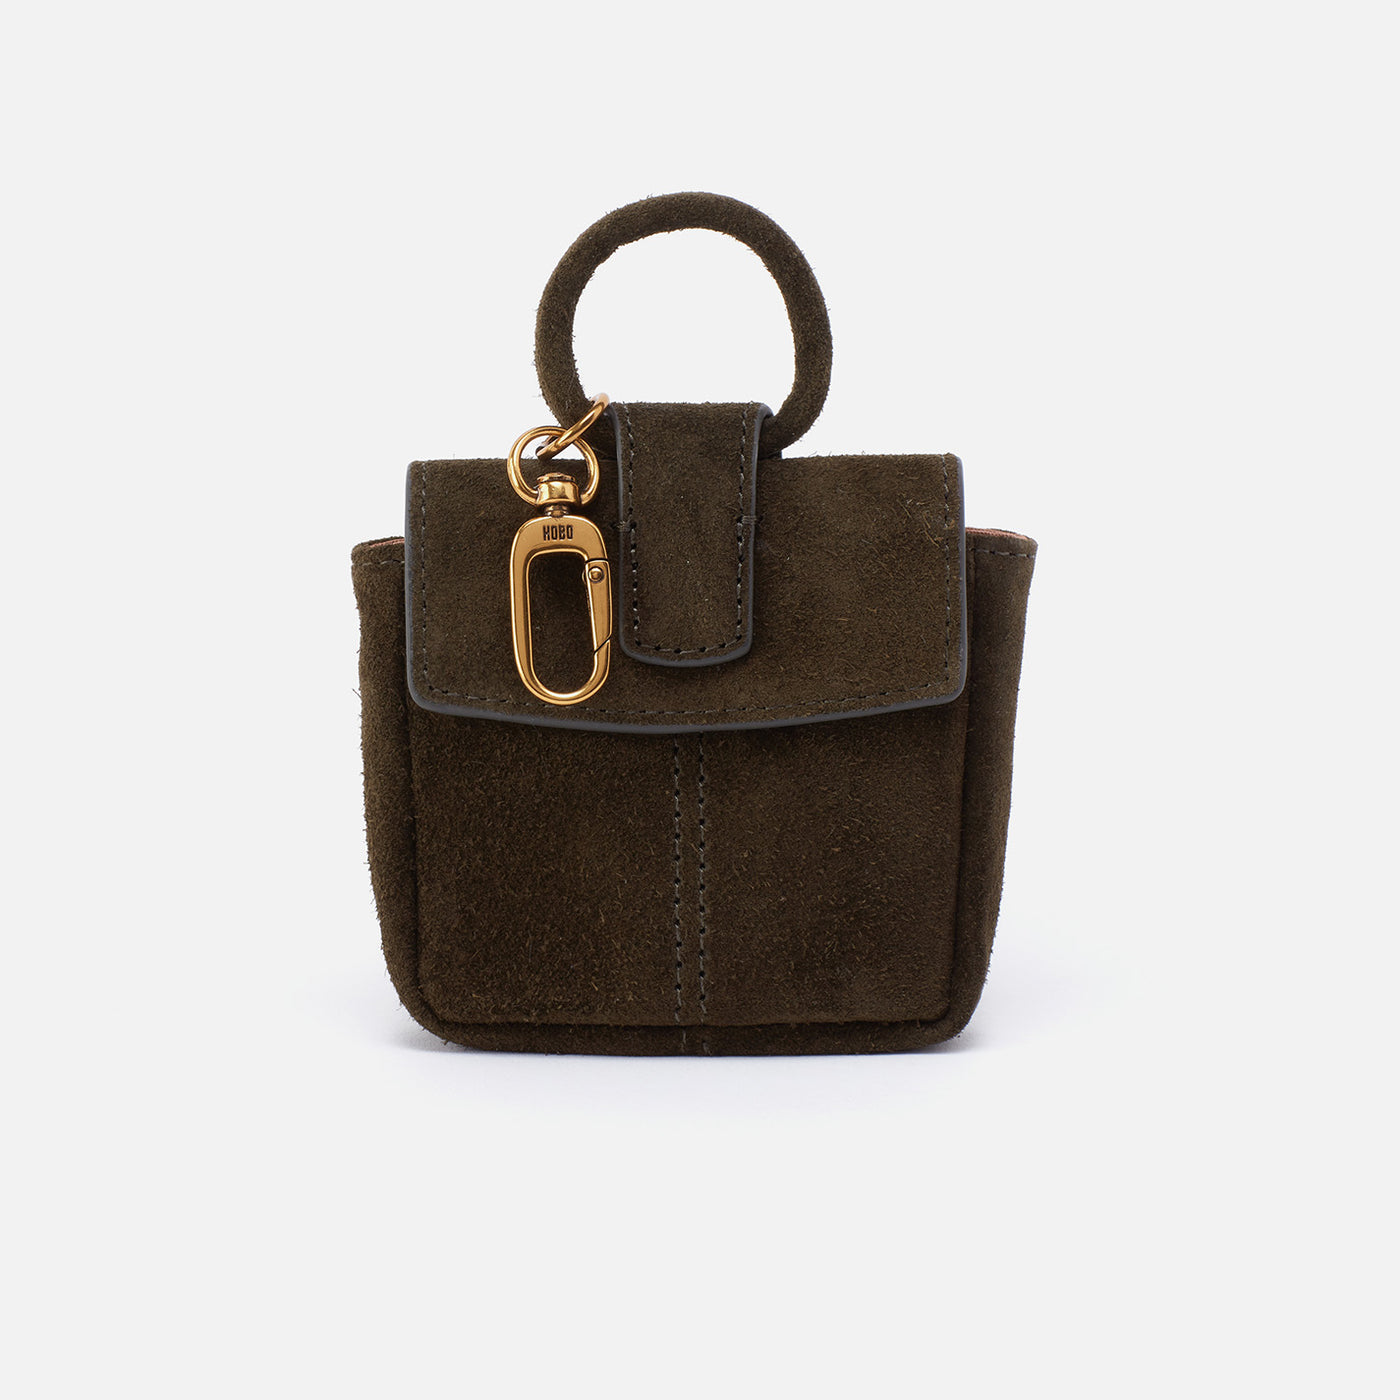 Leather bag charm